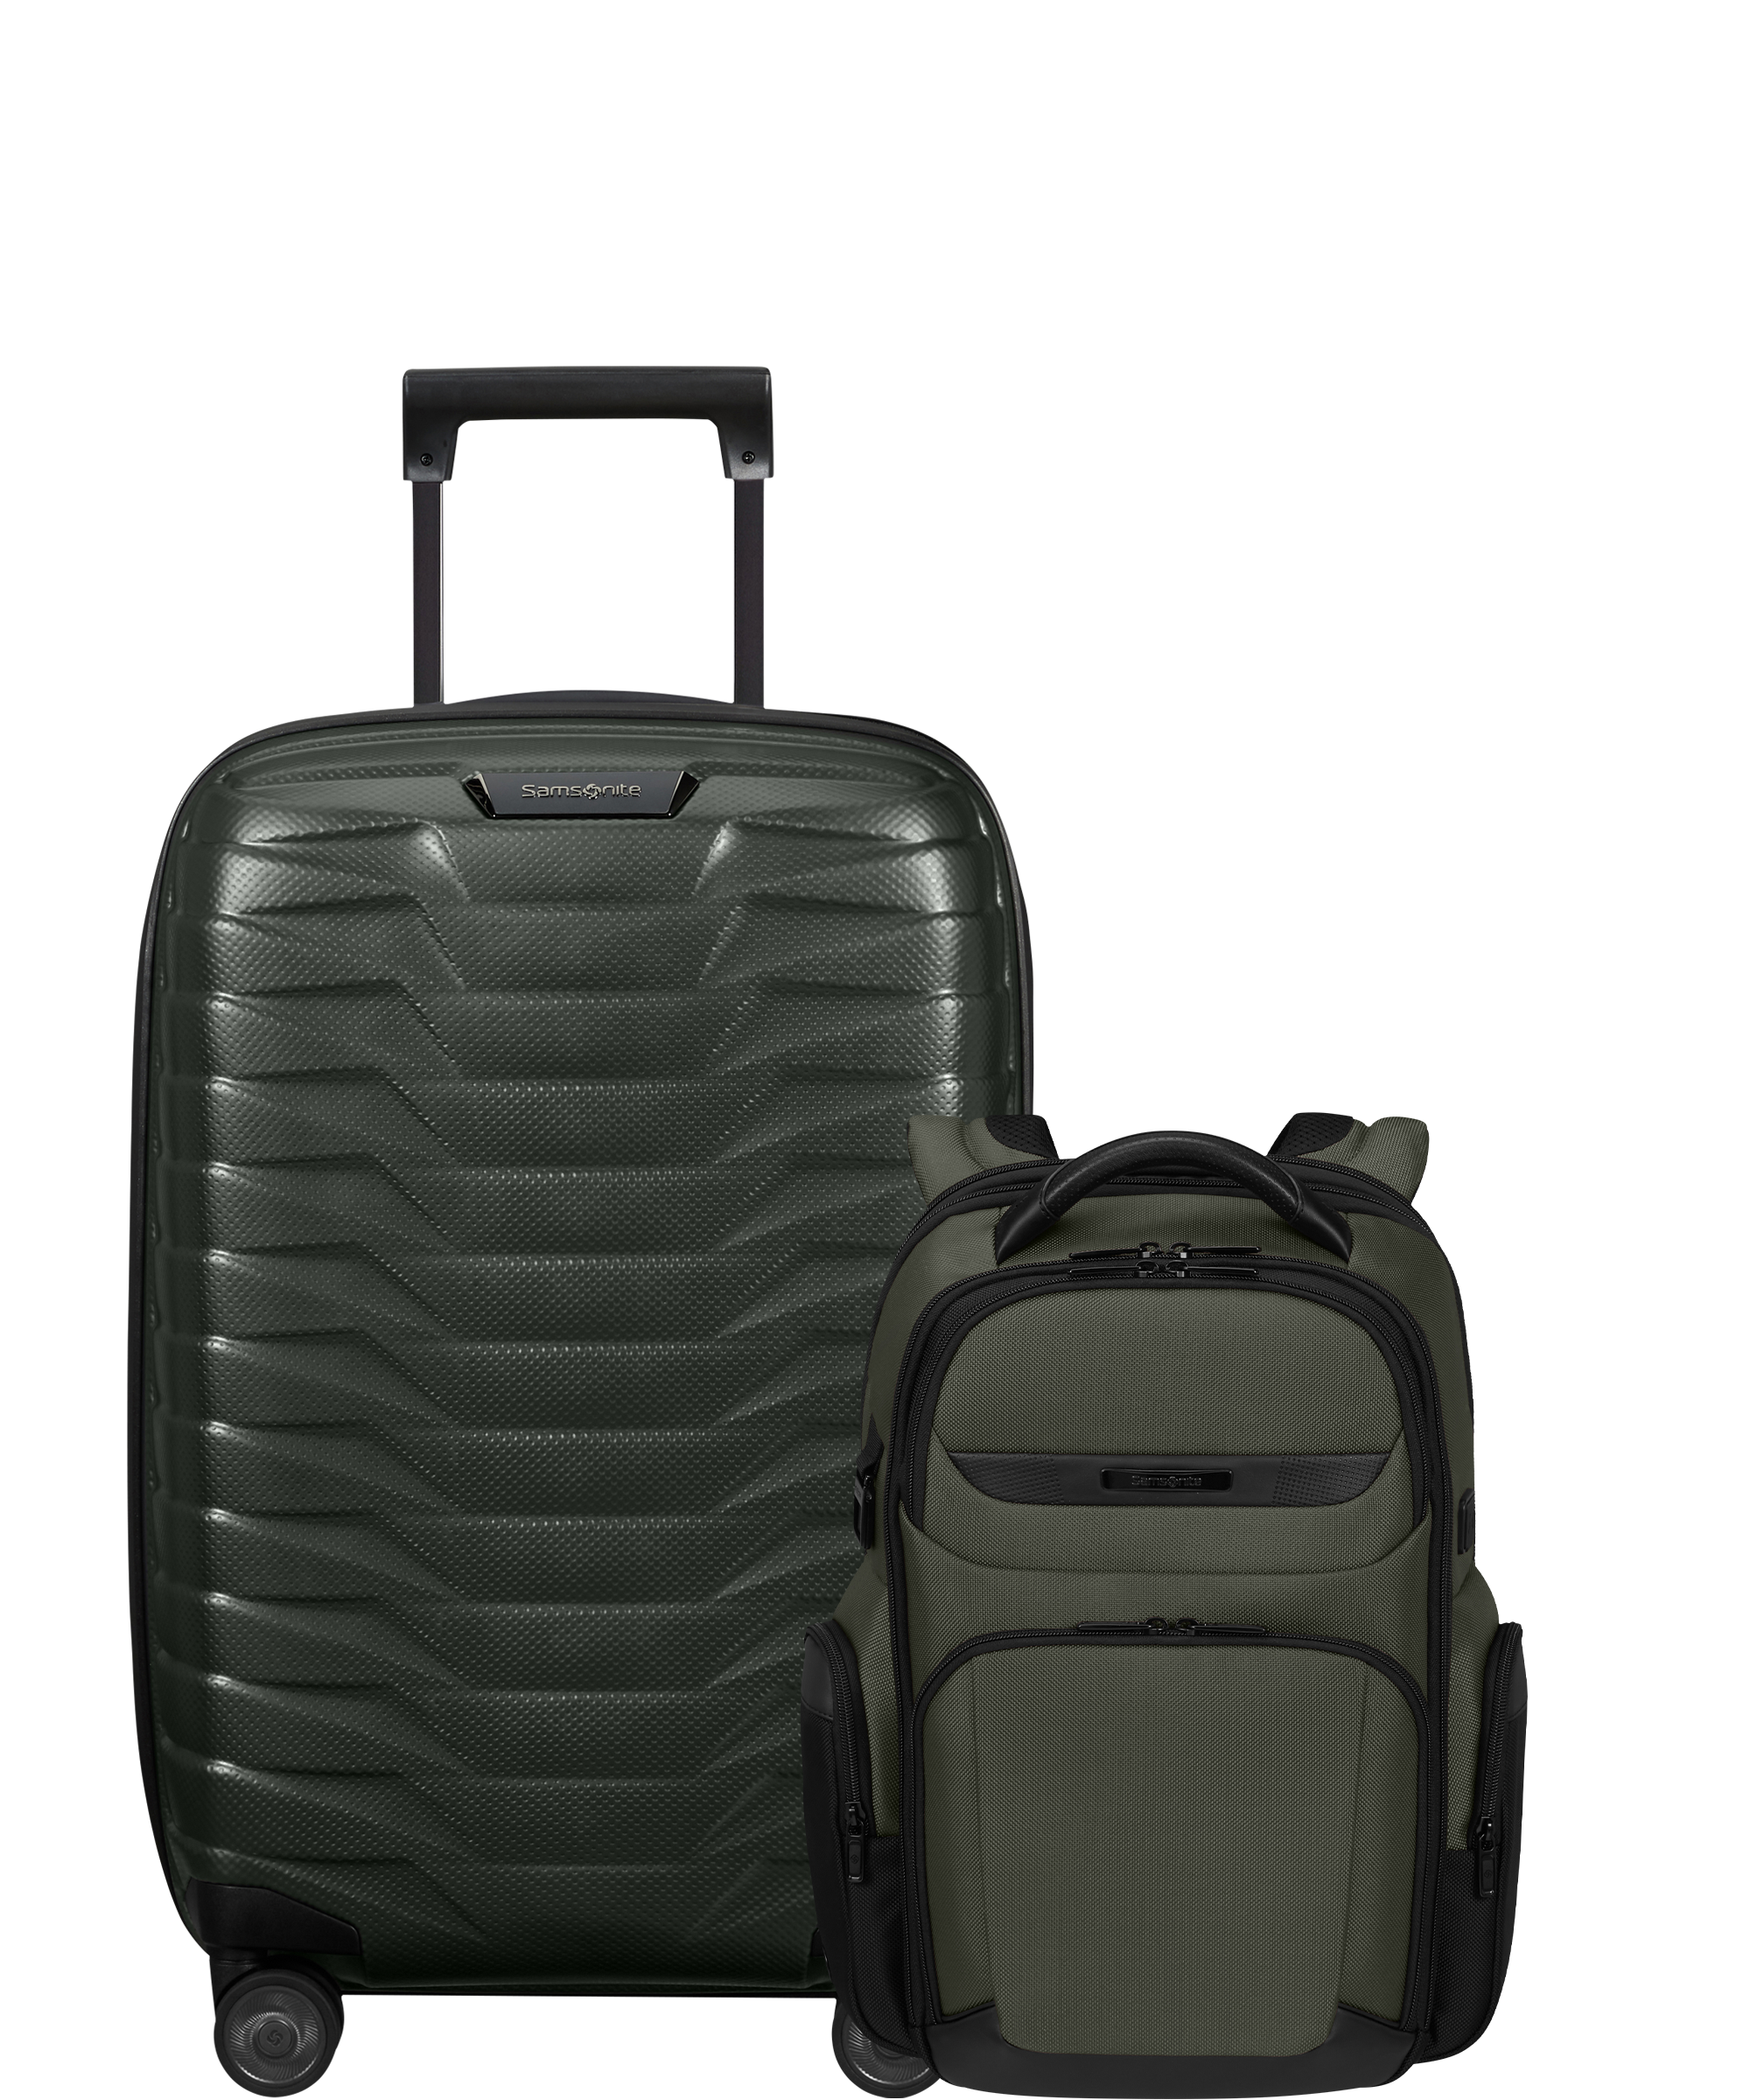 Samsonite Guardit 2.0 17.3 Inch 2-Wheel Rolling Tote Laptop Bag | Go Places